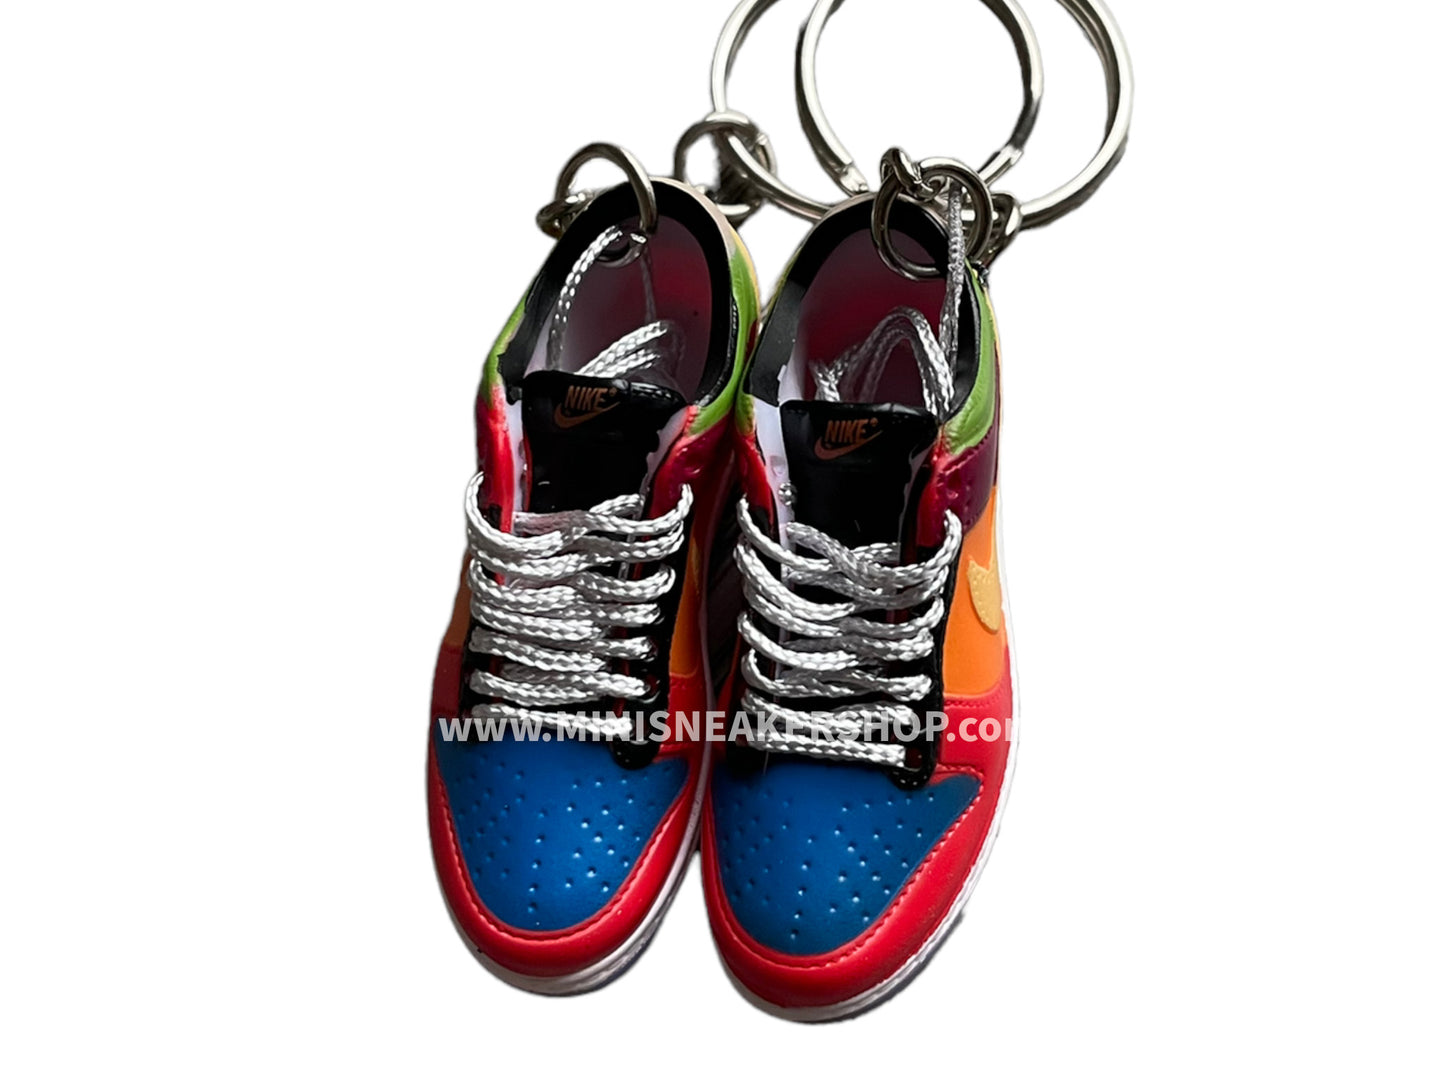 Mini sneaker keychain 3D Dunk - Viotech